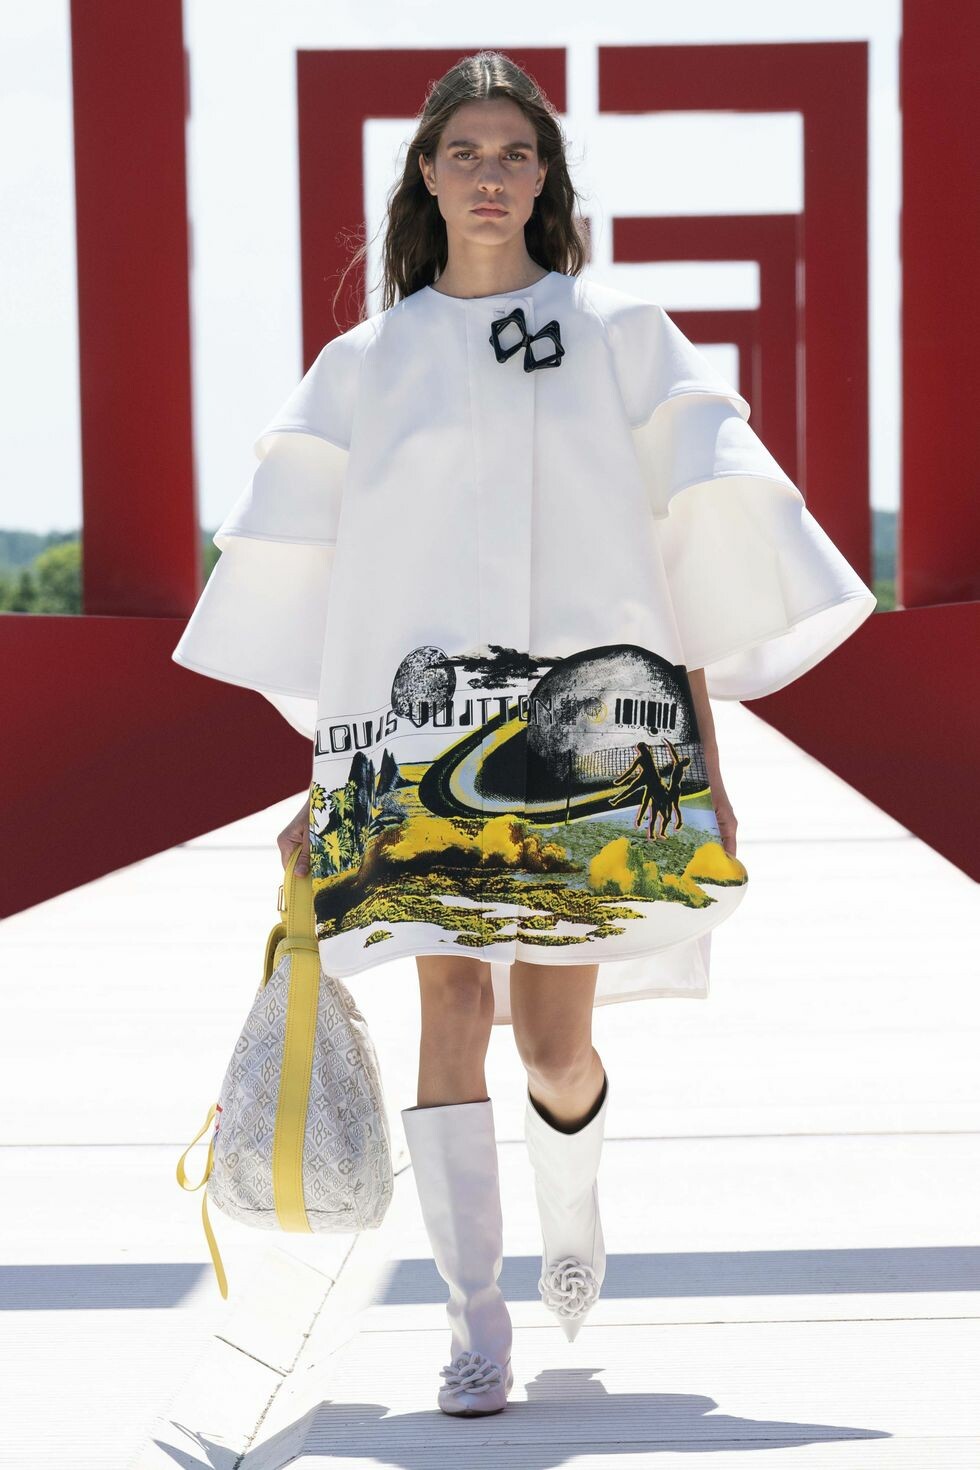 FEATURE – Louis Vuitton X: An Immersive Journey Through Fashion